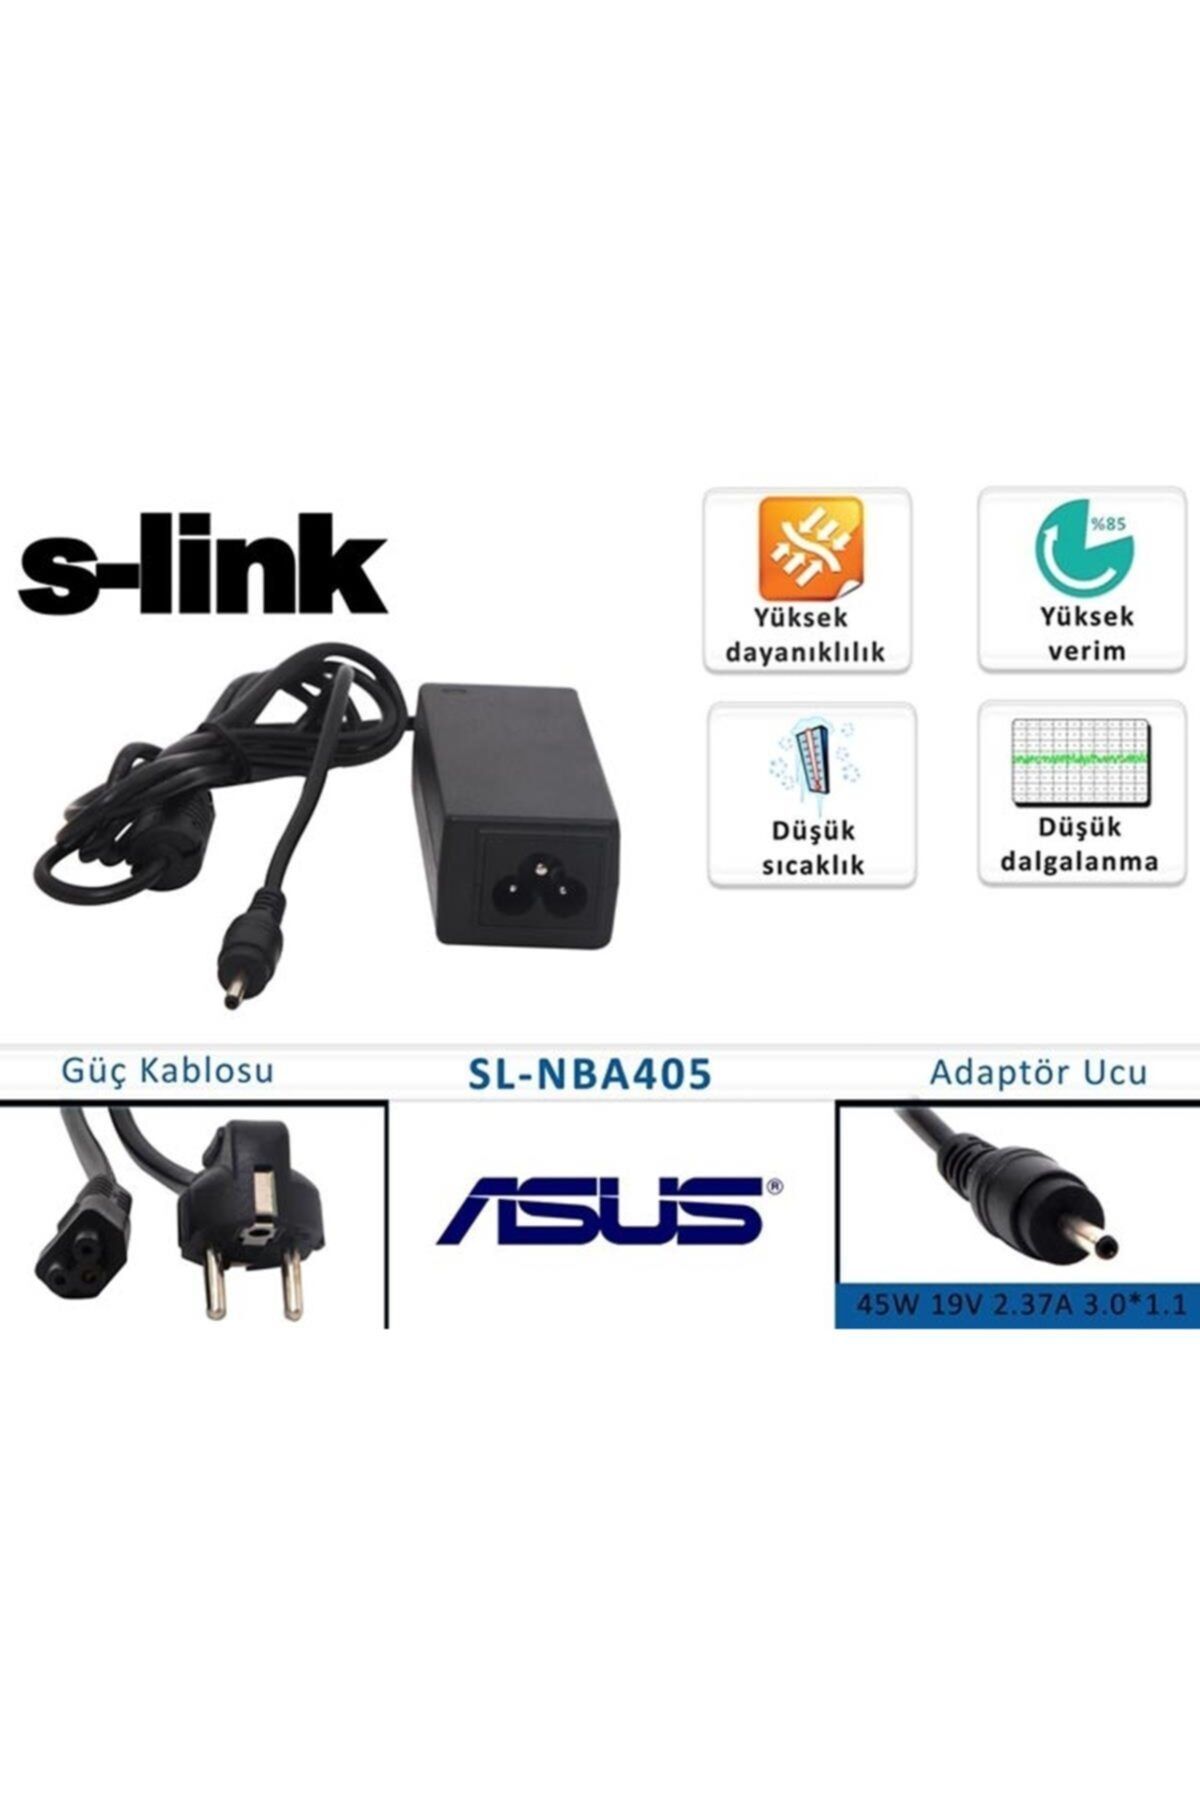 S-Link Sl-nba405 45w 19v 2.37a 3.0-1.1 Notebook Standart Adaptörü